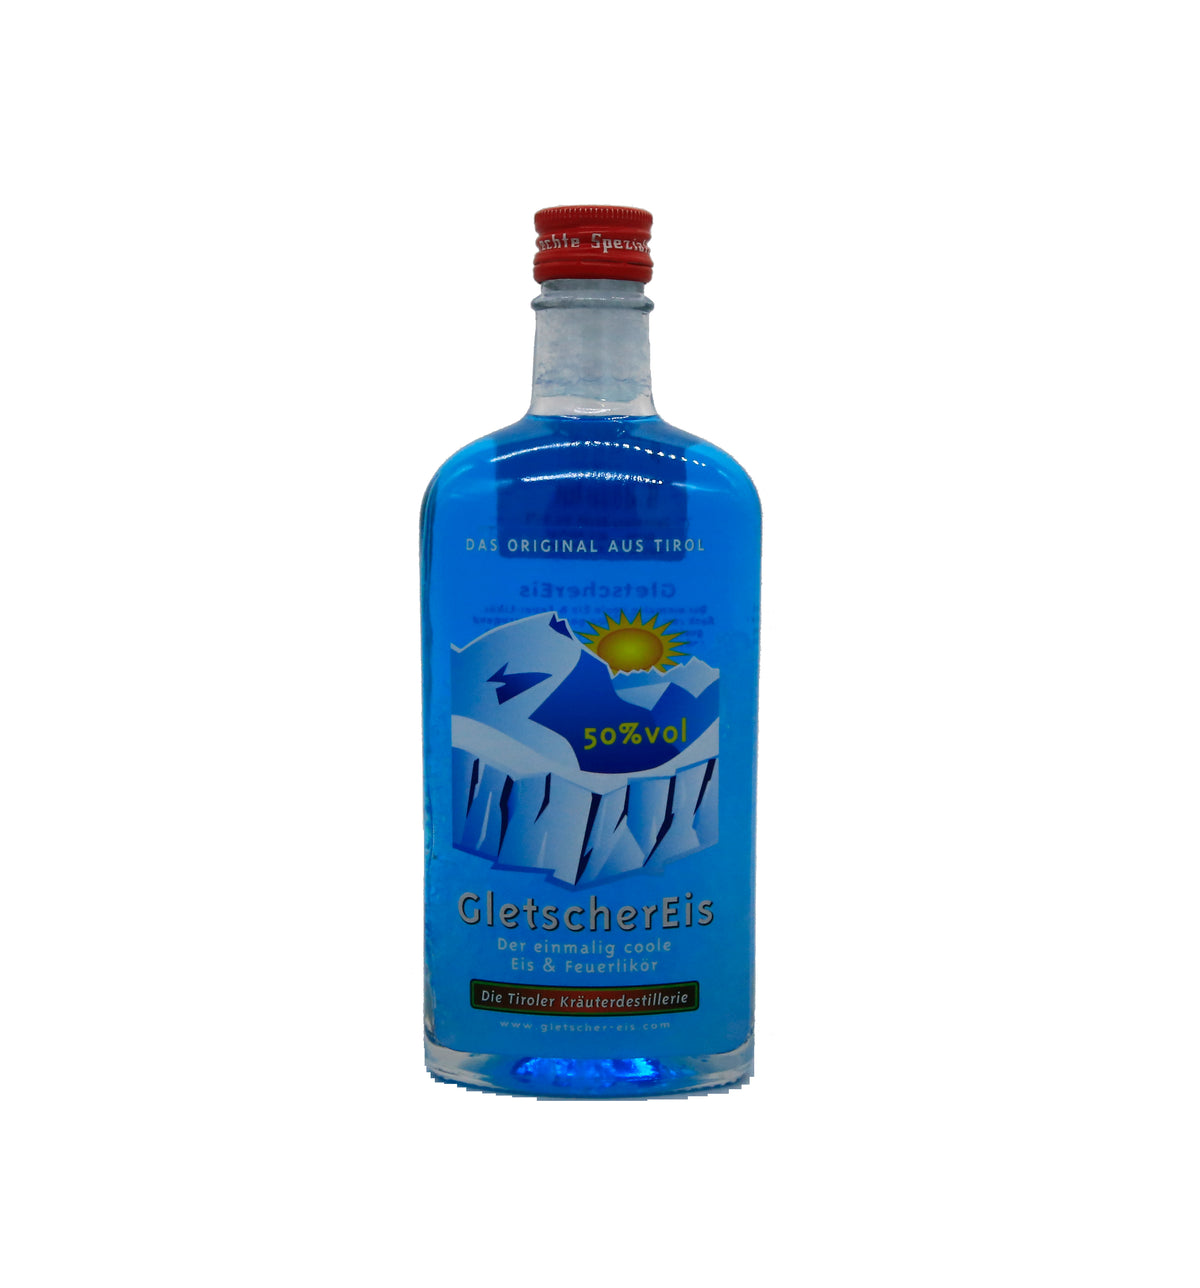 Baumann GletscherEis ( Glacier German Specialties — 500ml | Germanliquor.com.au ) Ice Liquor